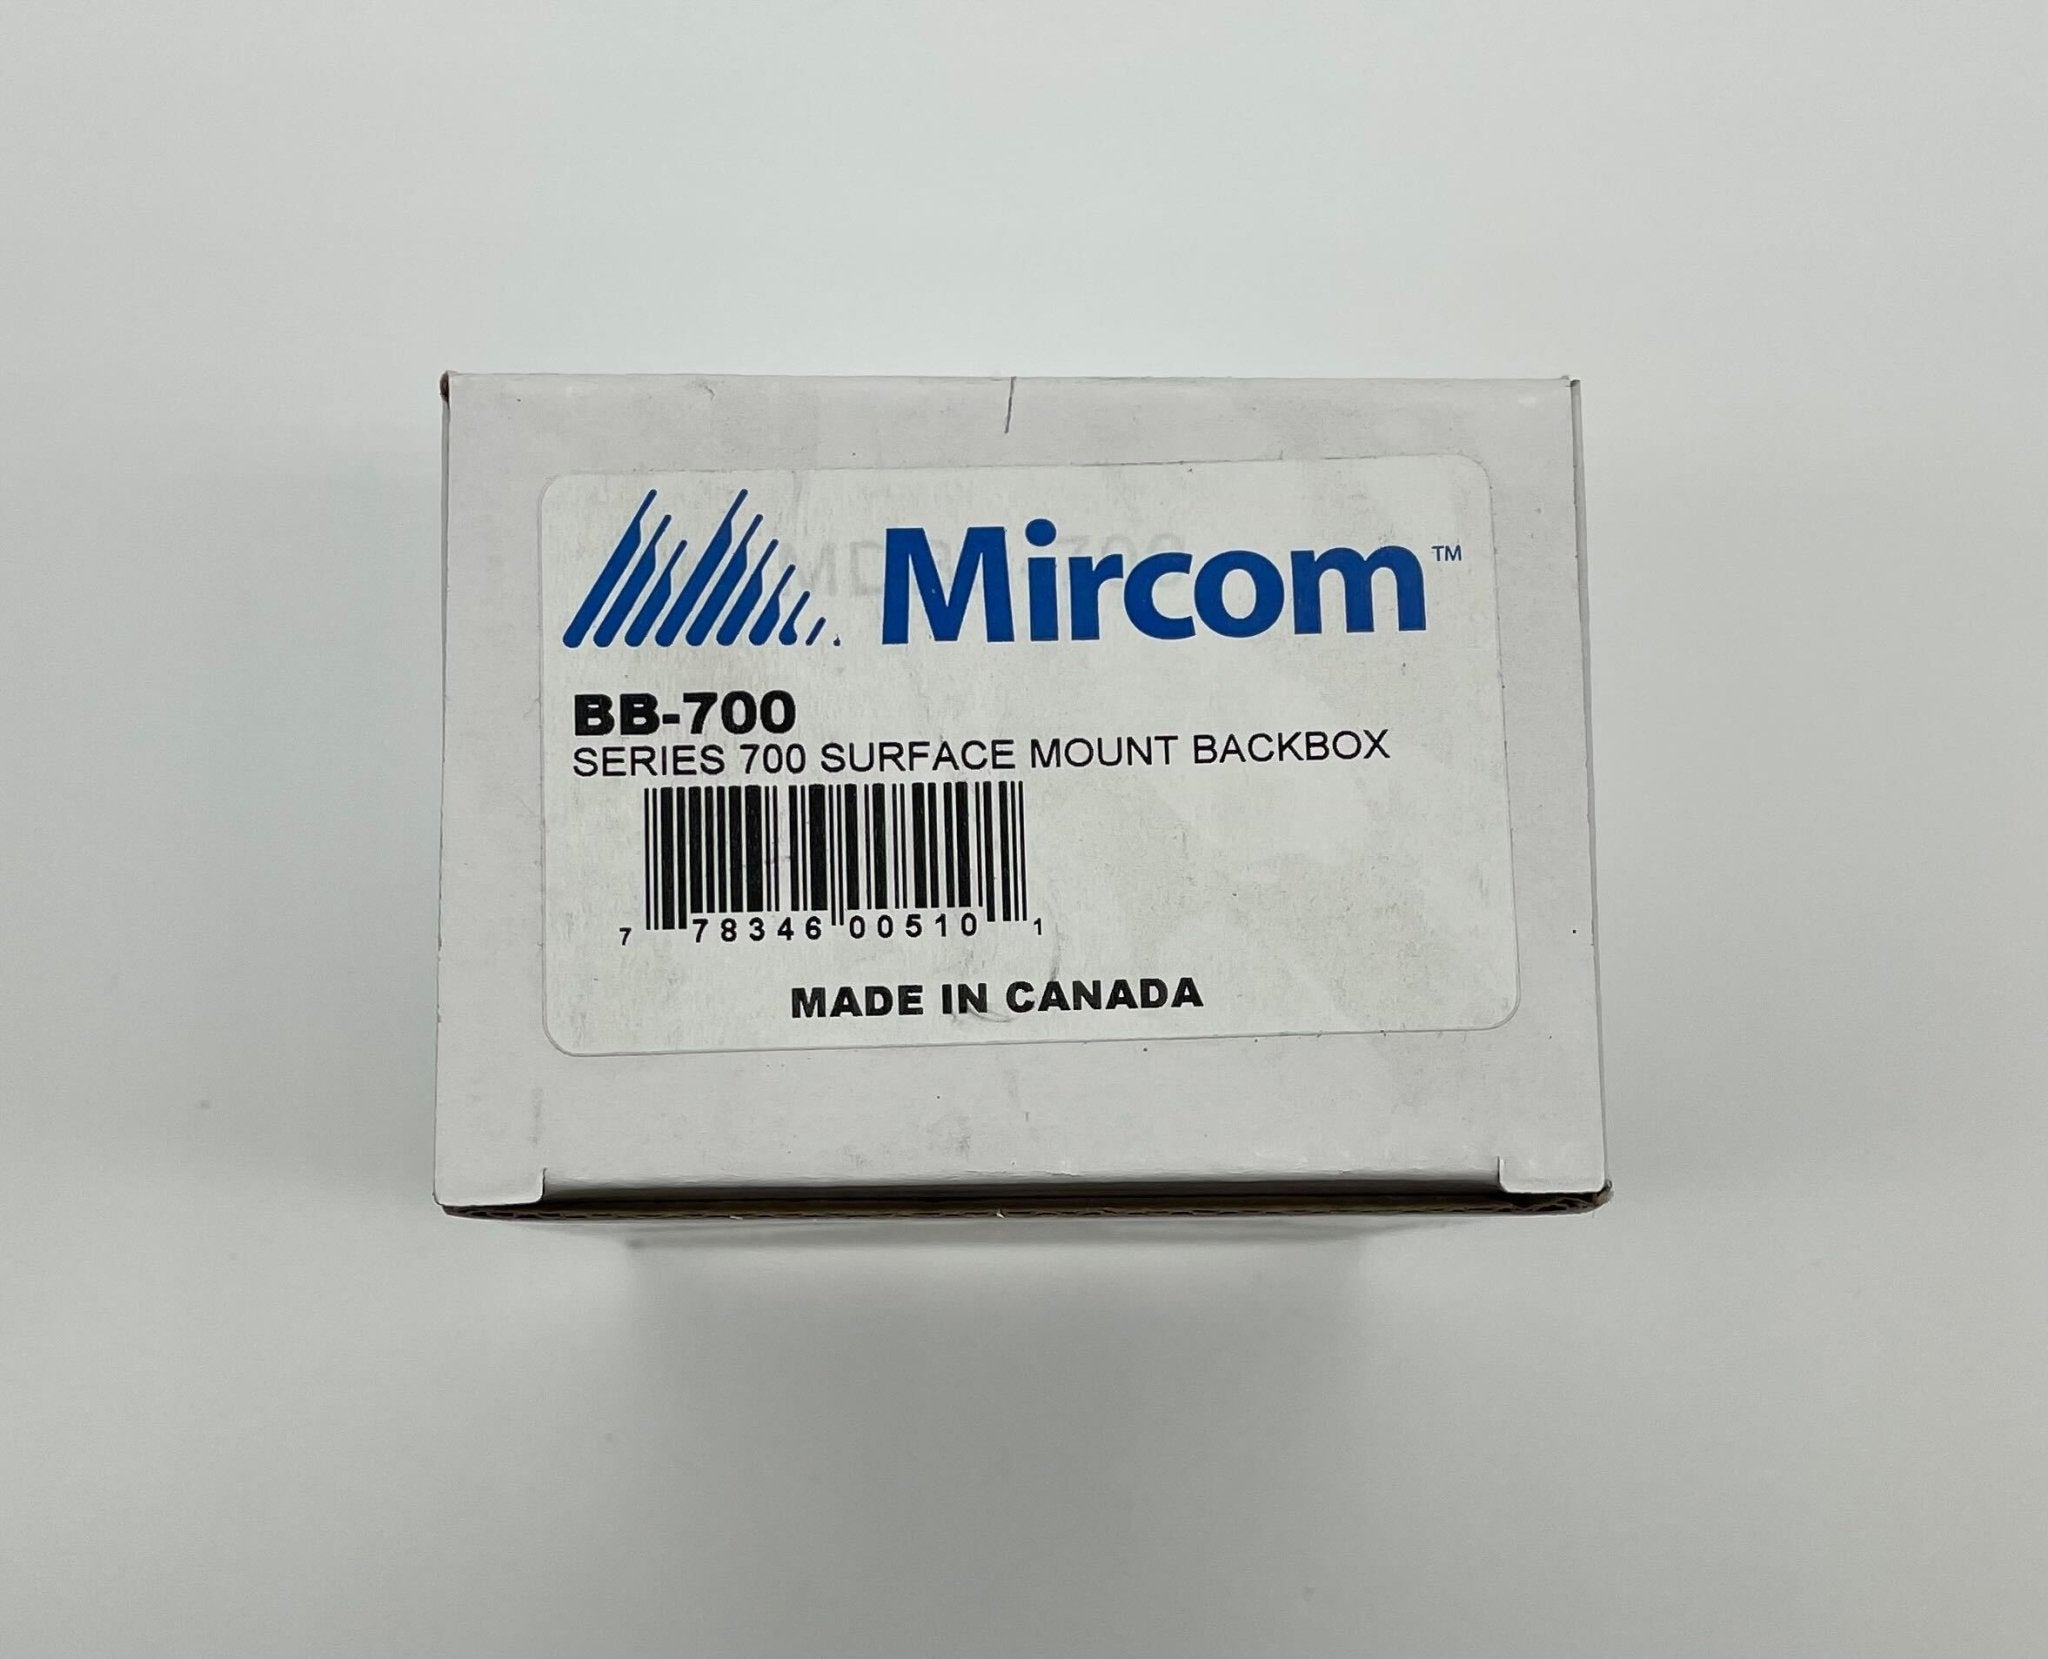 Mircom BB-700 - The Fire Alarm Supplier